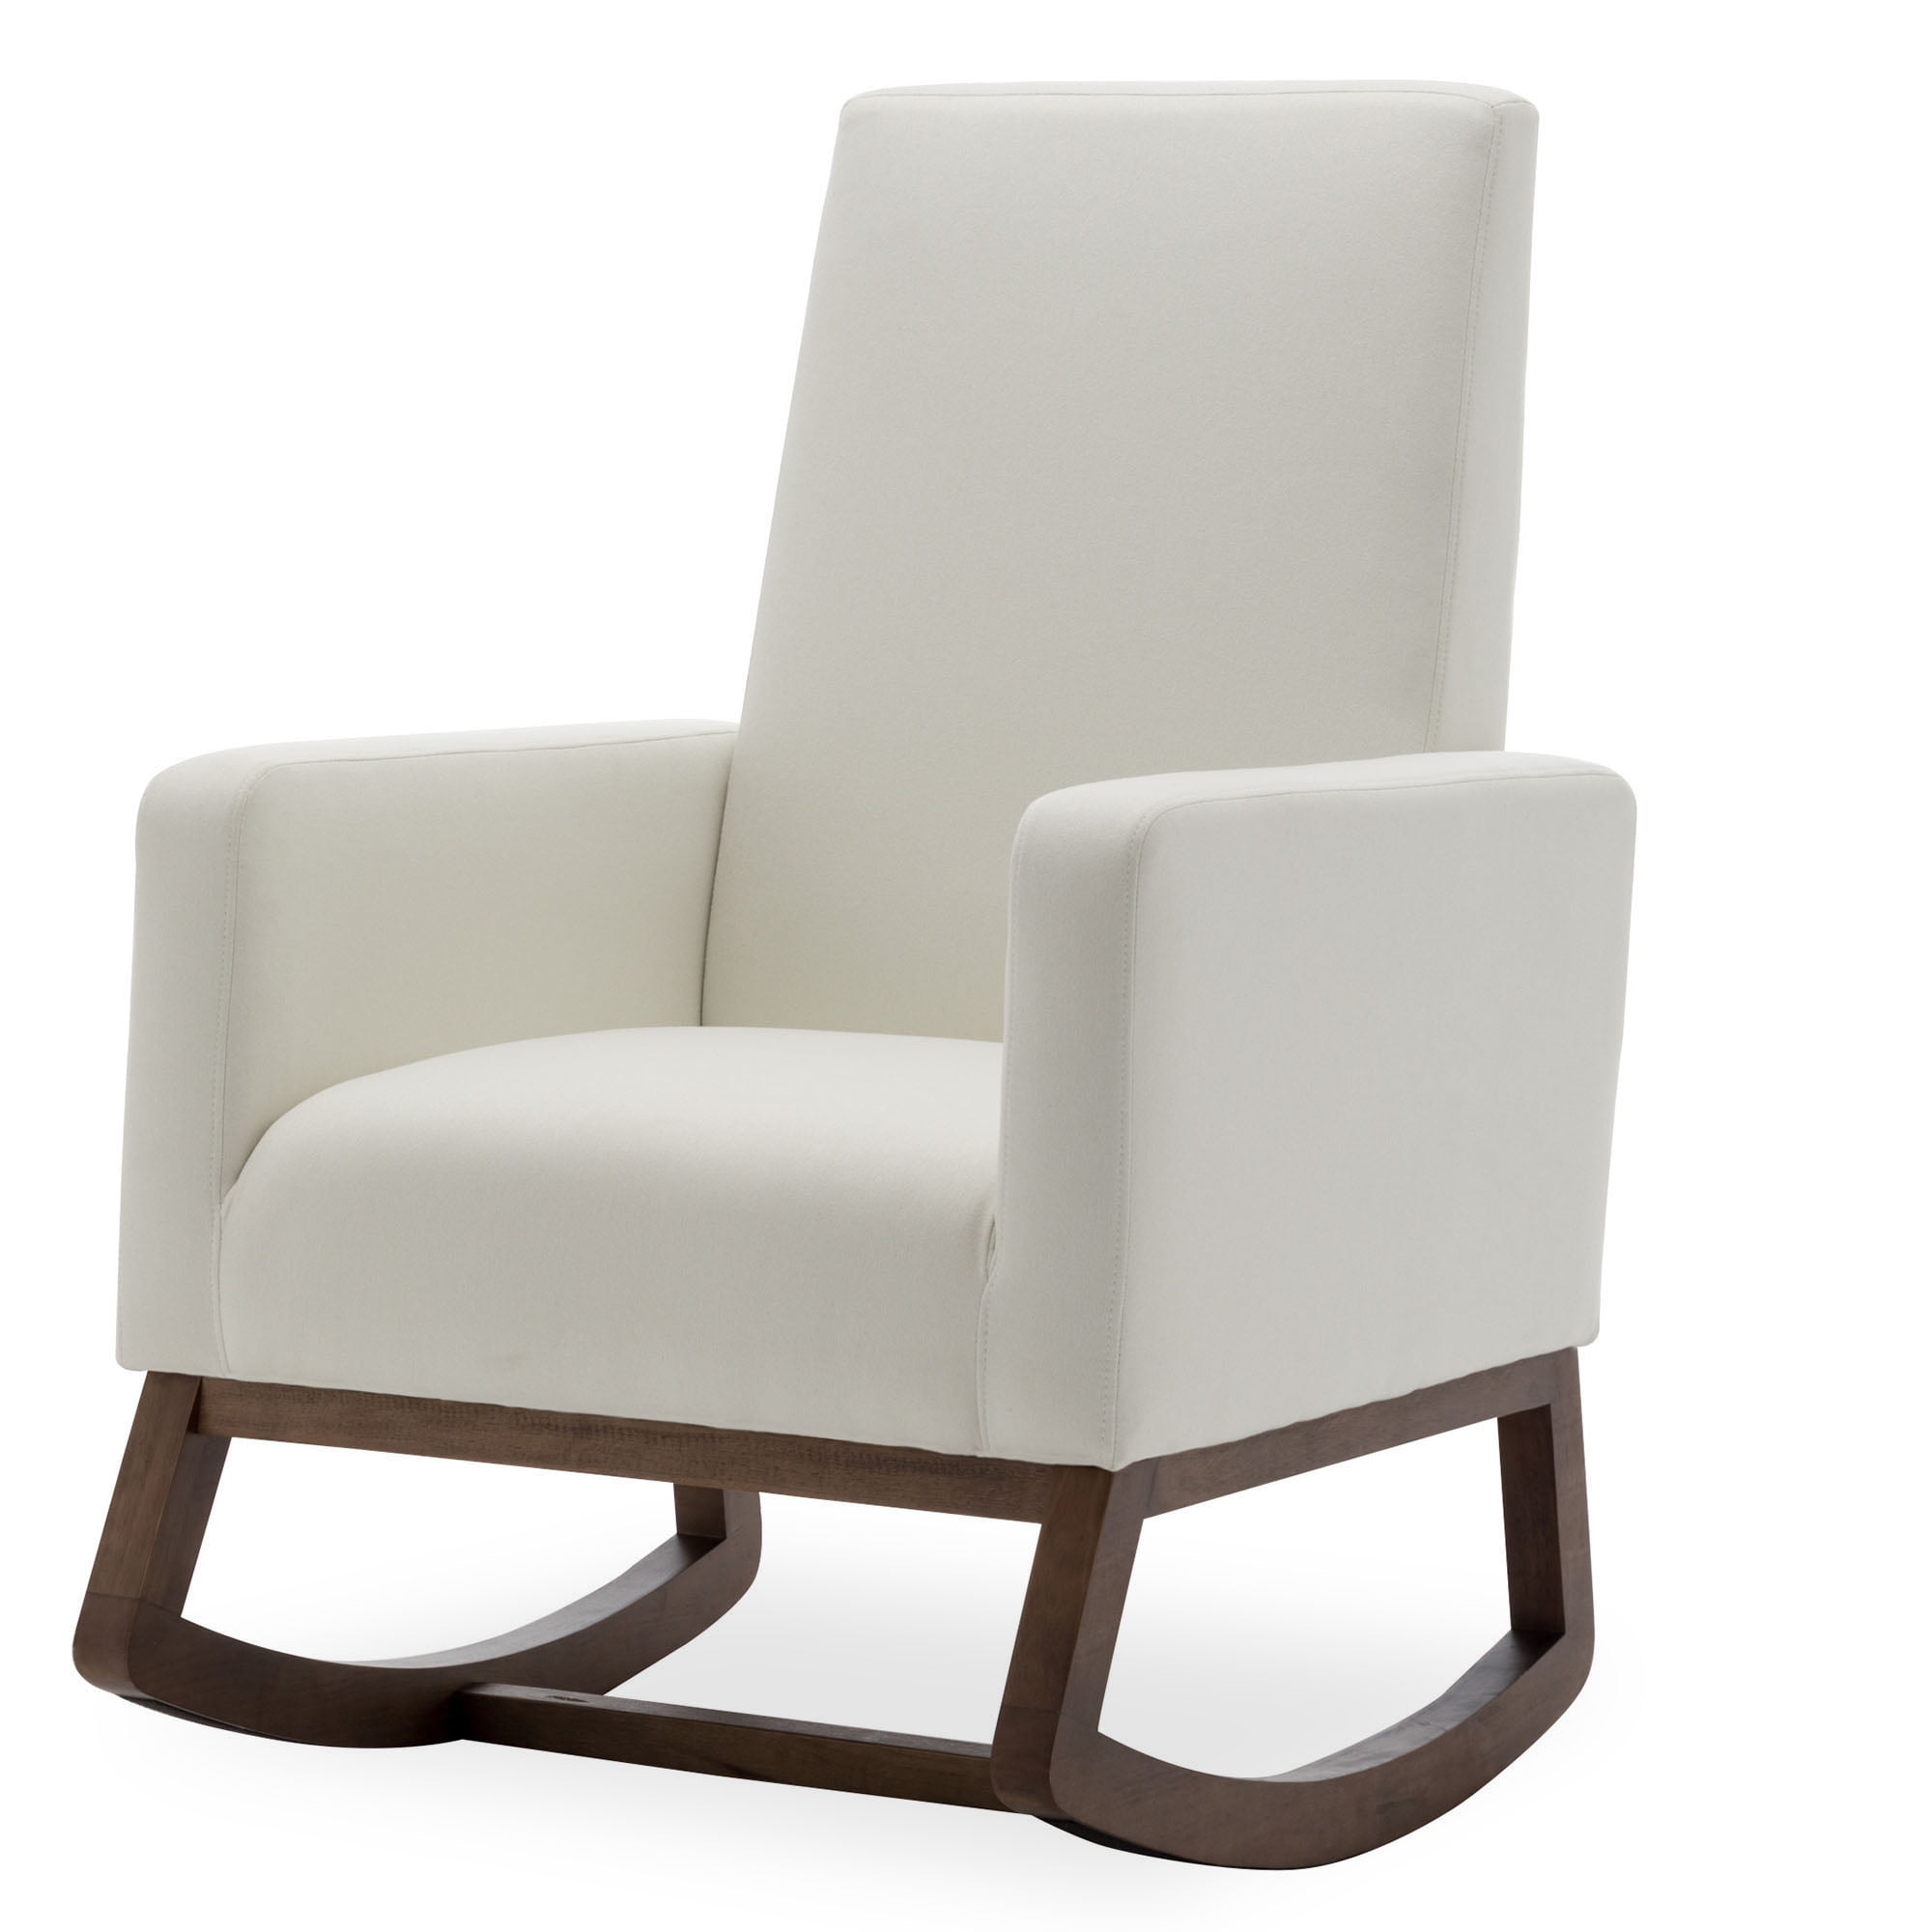 BELLEZE Modern Rocking Chair Upholstered Fabric High Back ...